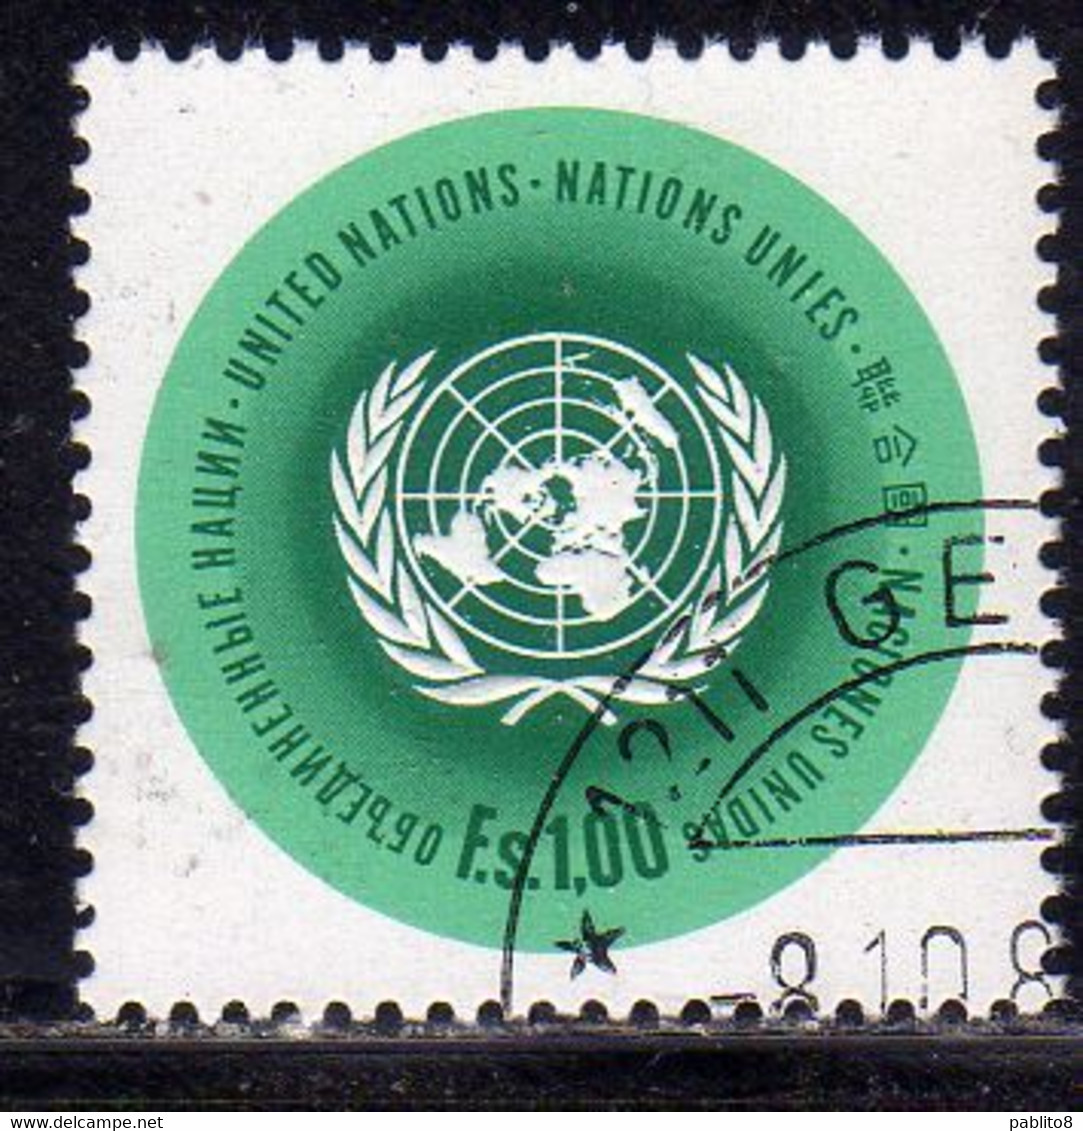 UNITED NATIONS GENEVE GINEVRA GENEVA SVIZZERA ONU UN UNO 1969 1970 EMBLEM EMBLEMA 1.00fr USED OBLITERE' - Gebruikt